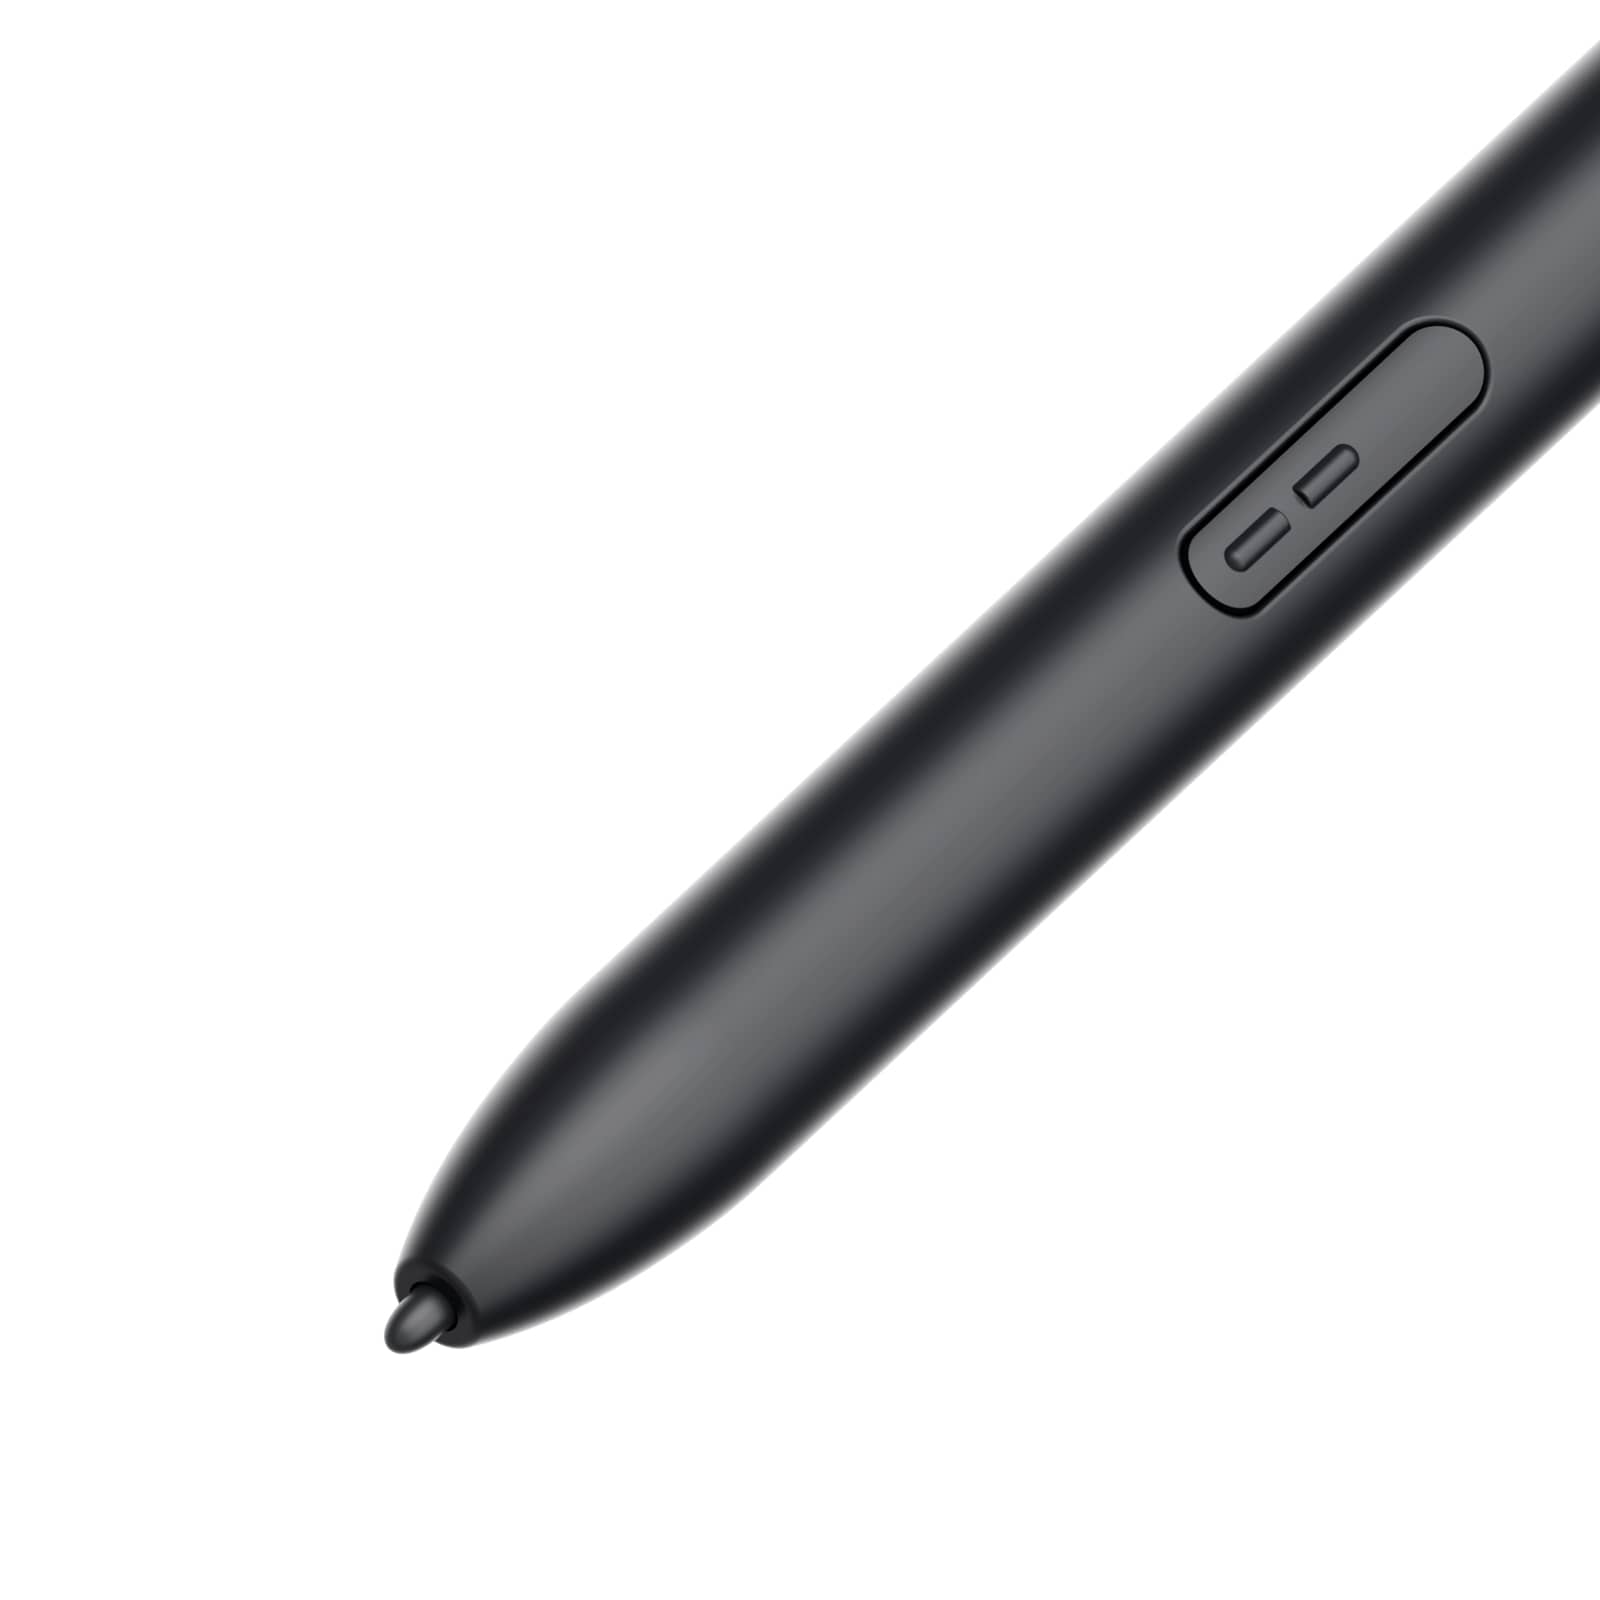 Stylus Pen for Samsung Tab